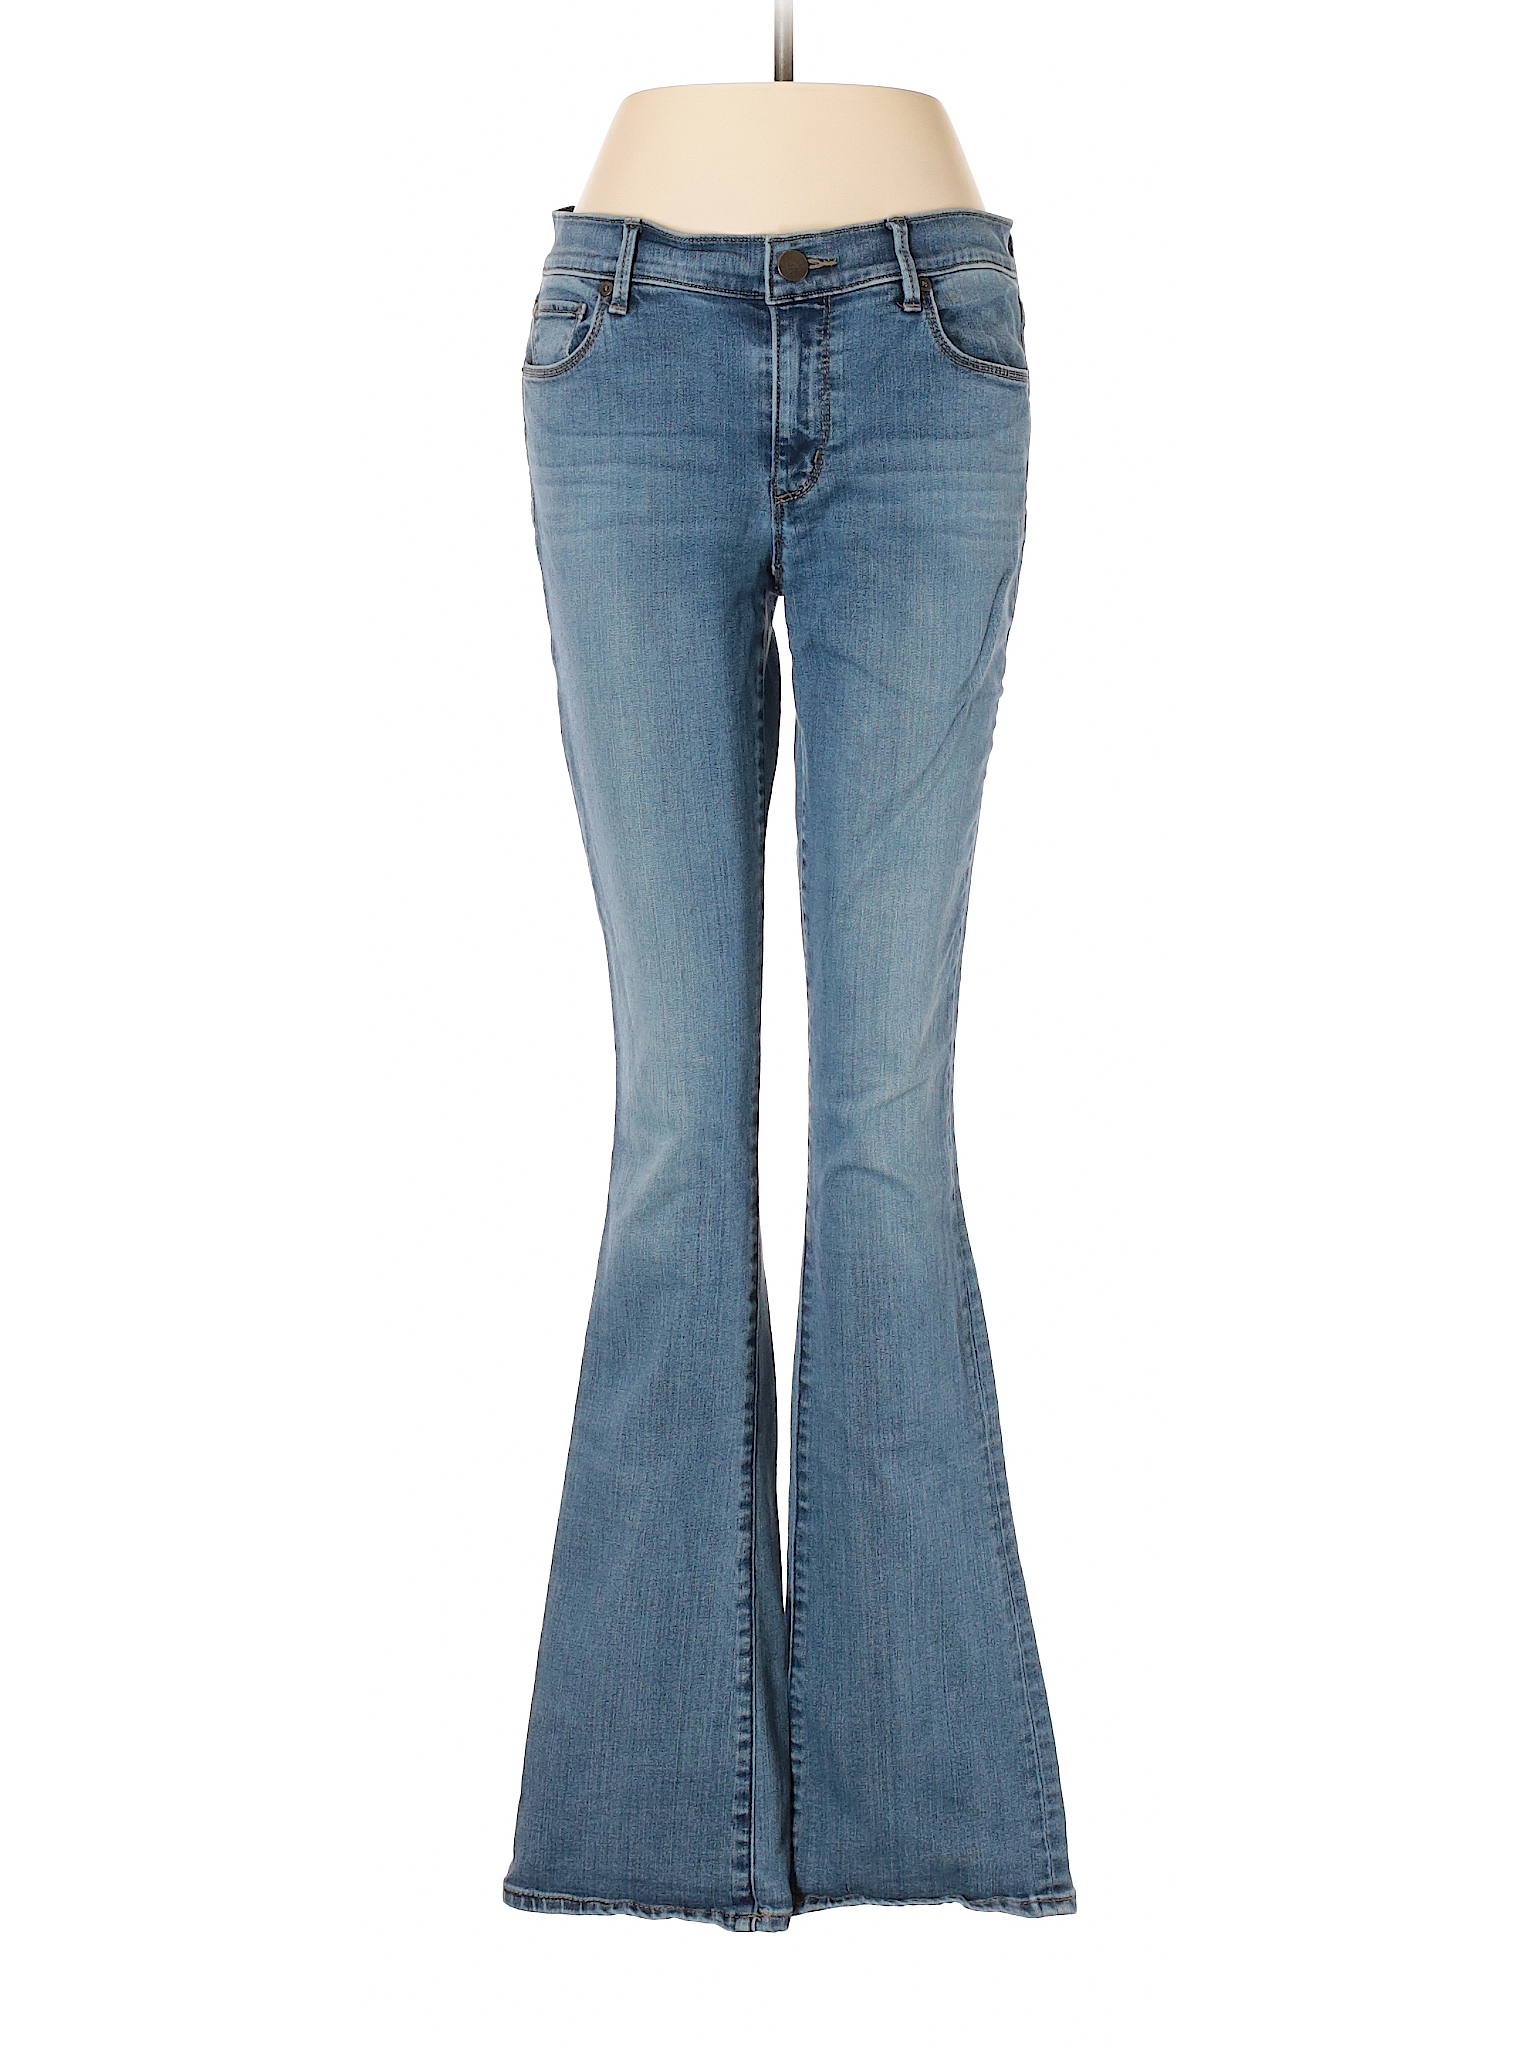 Ann Taylor LOFT Solid Blue Jeans Size 6 - 90% off | thredUP